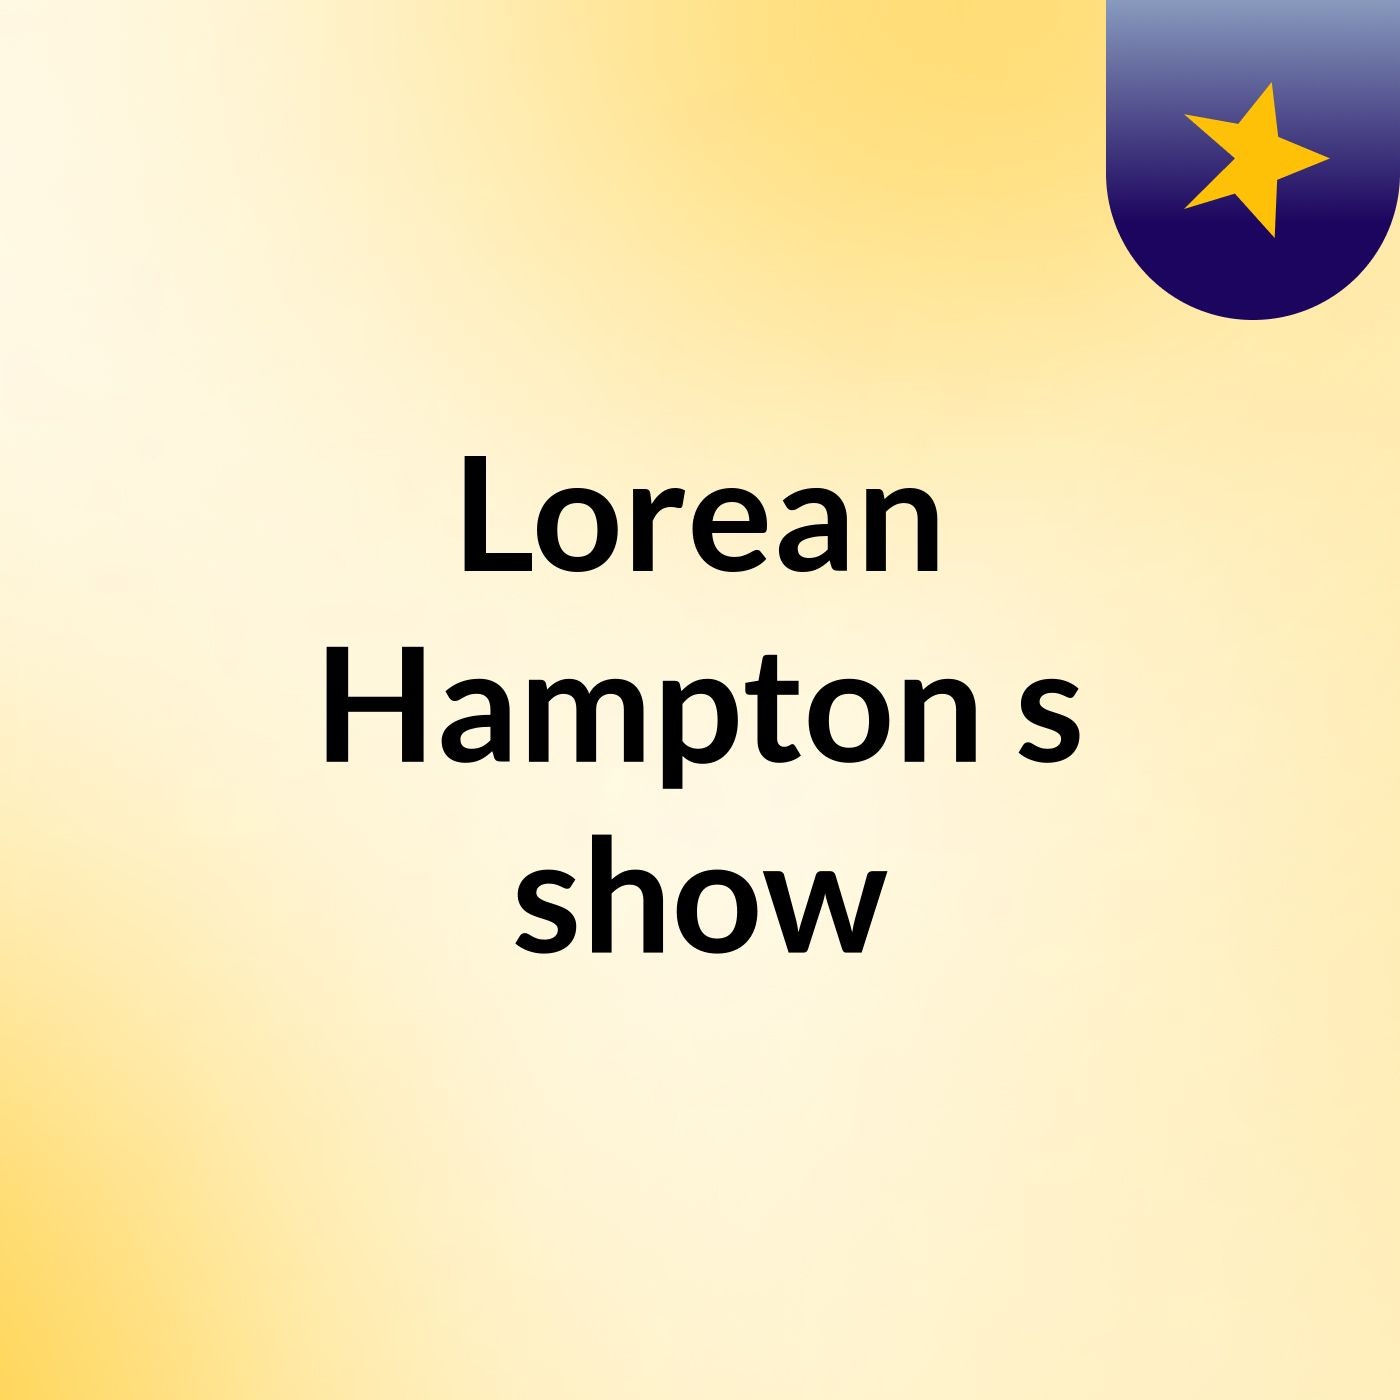 Lorean Hampton's show